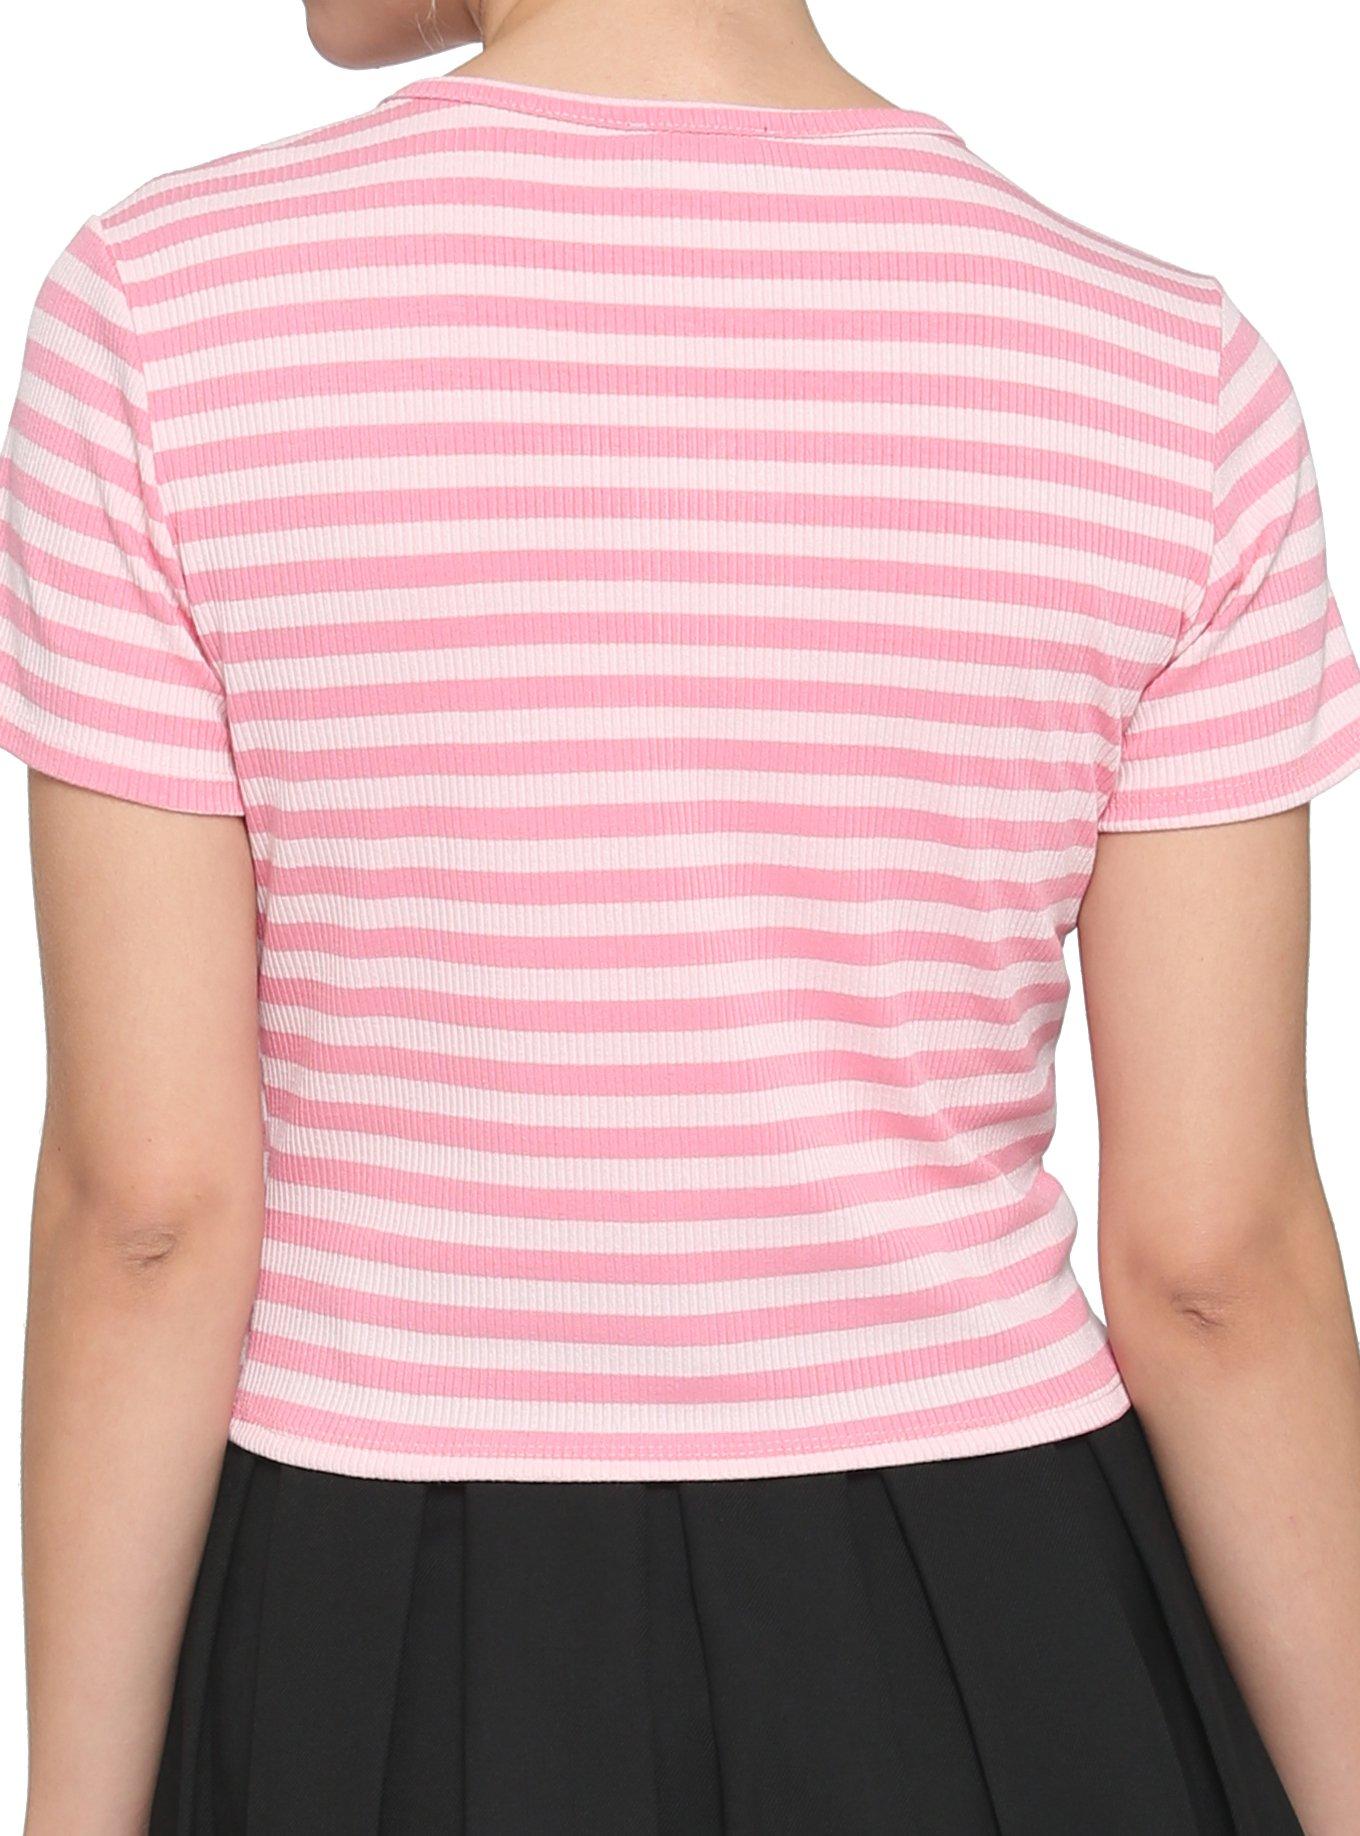 Embroidered Strawberry Stripe Girls Baby T-Shirt, STRIPES - RED, alternate